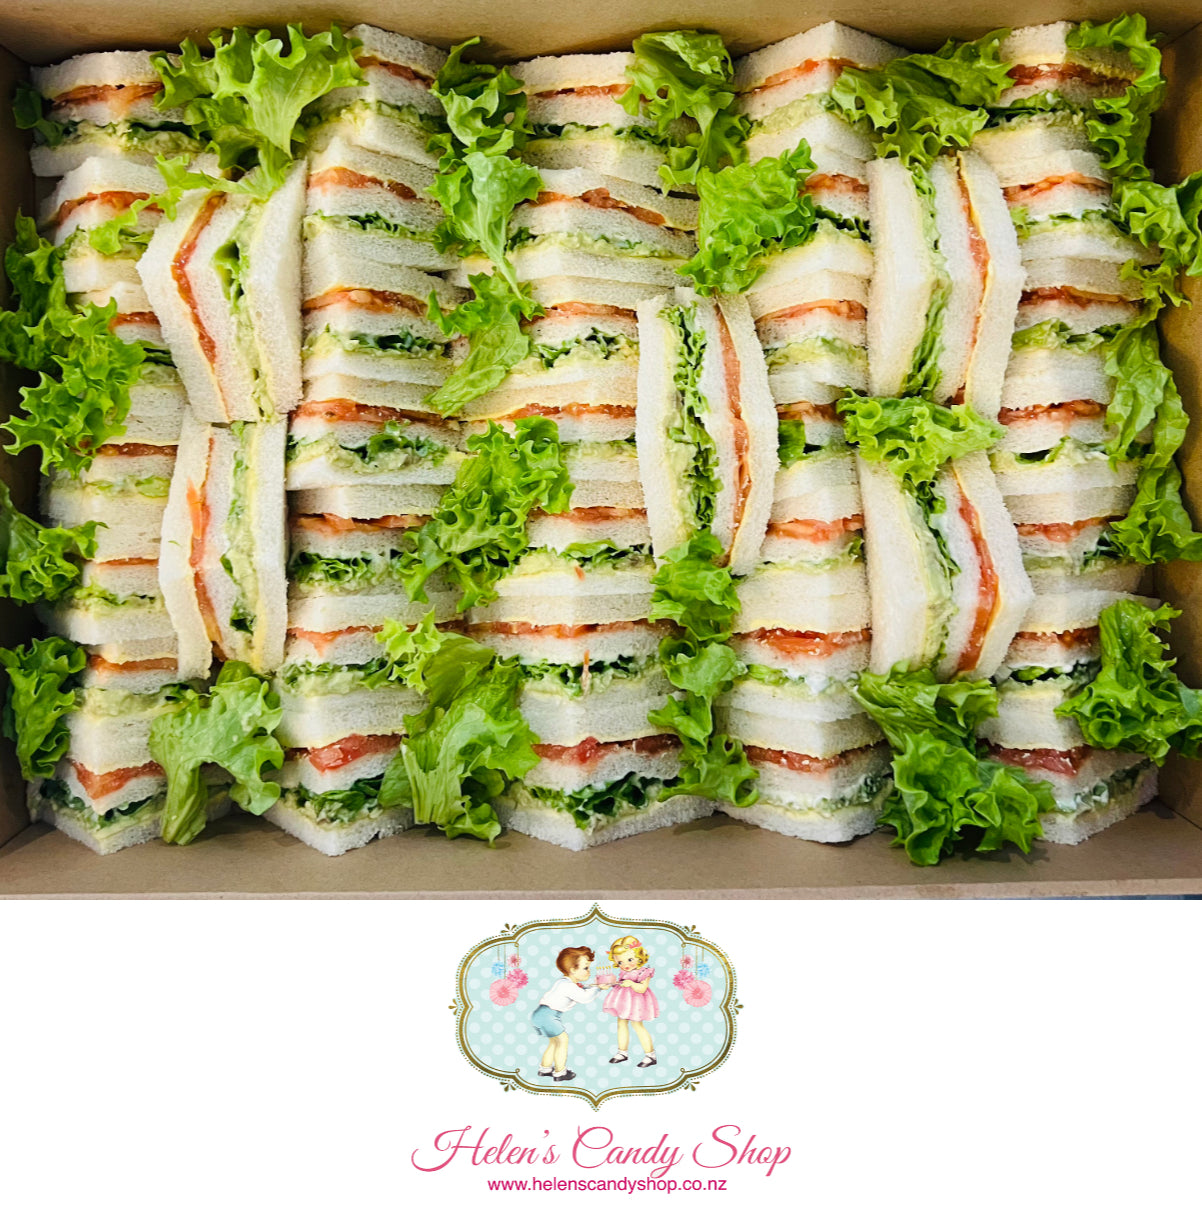 Morning Sandwich Platter for 20 people